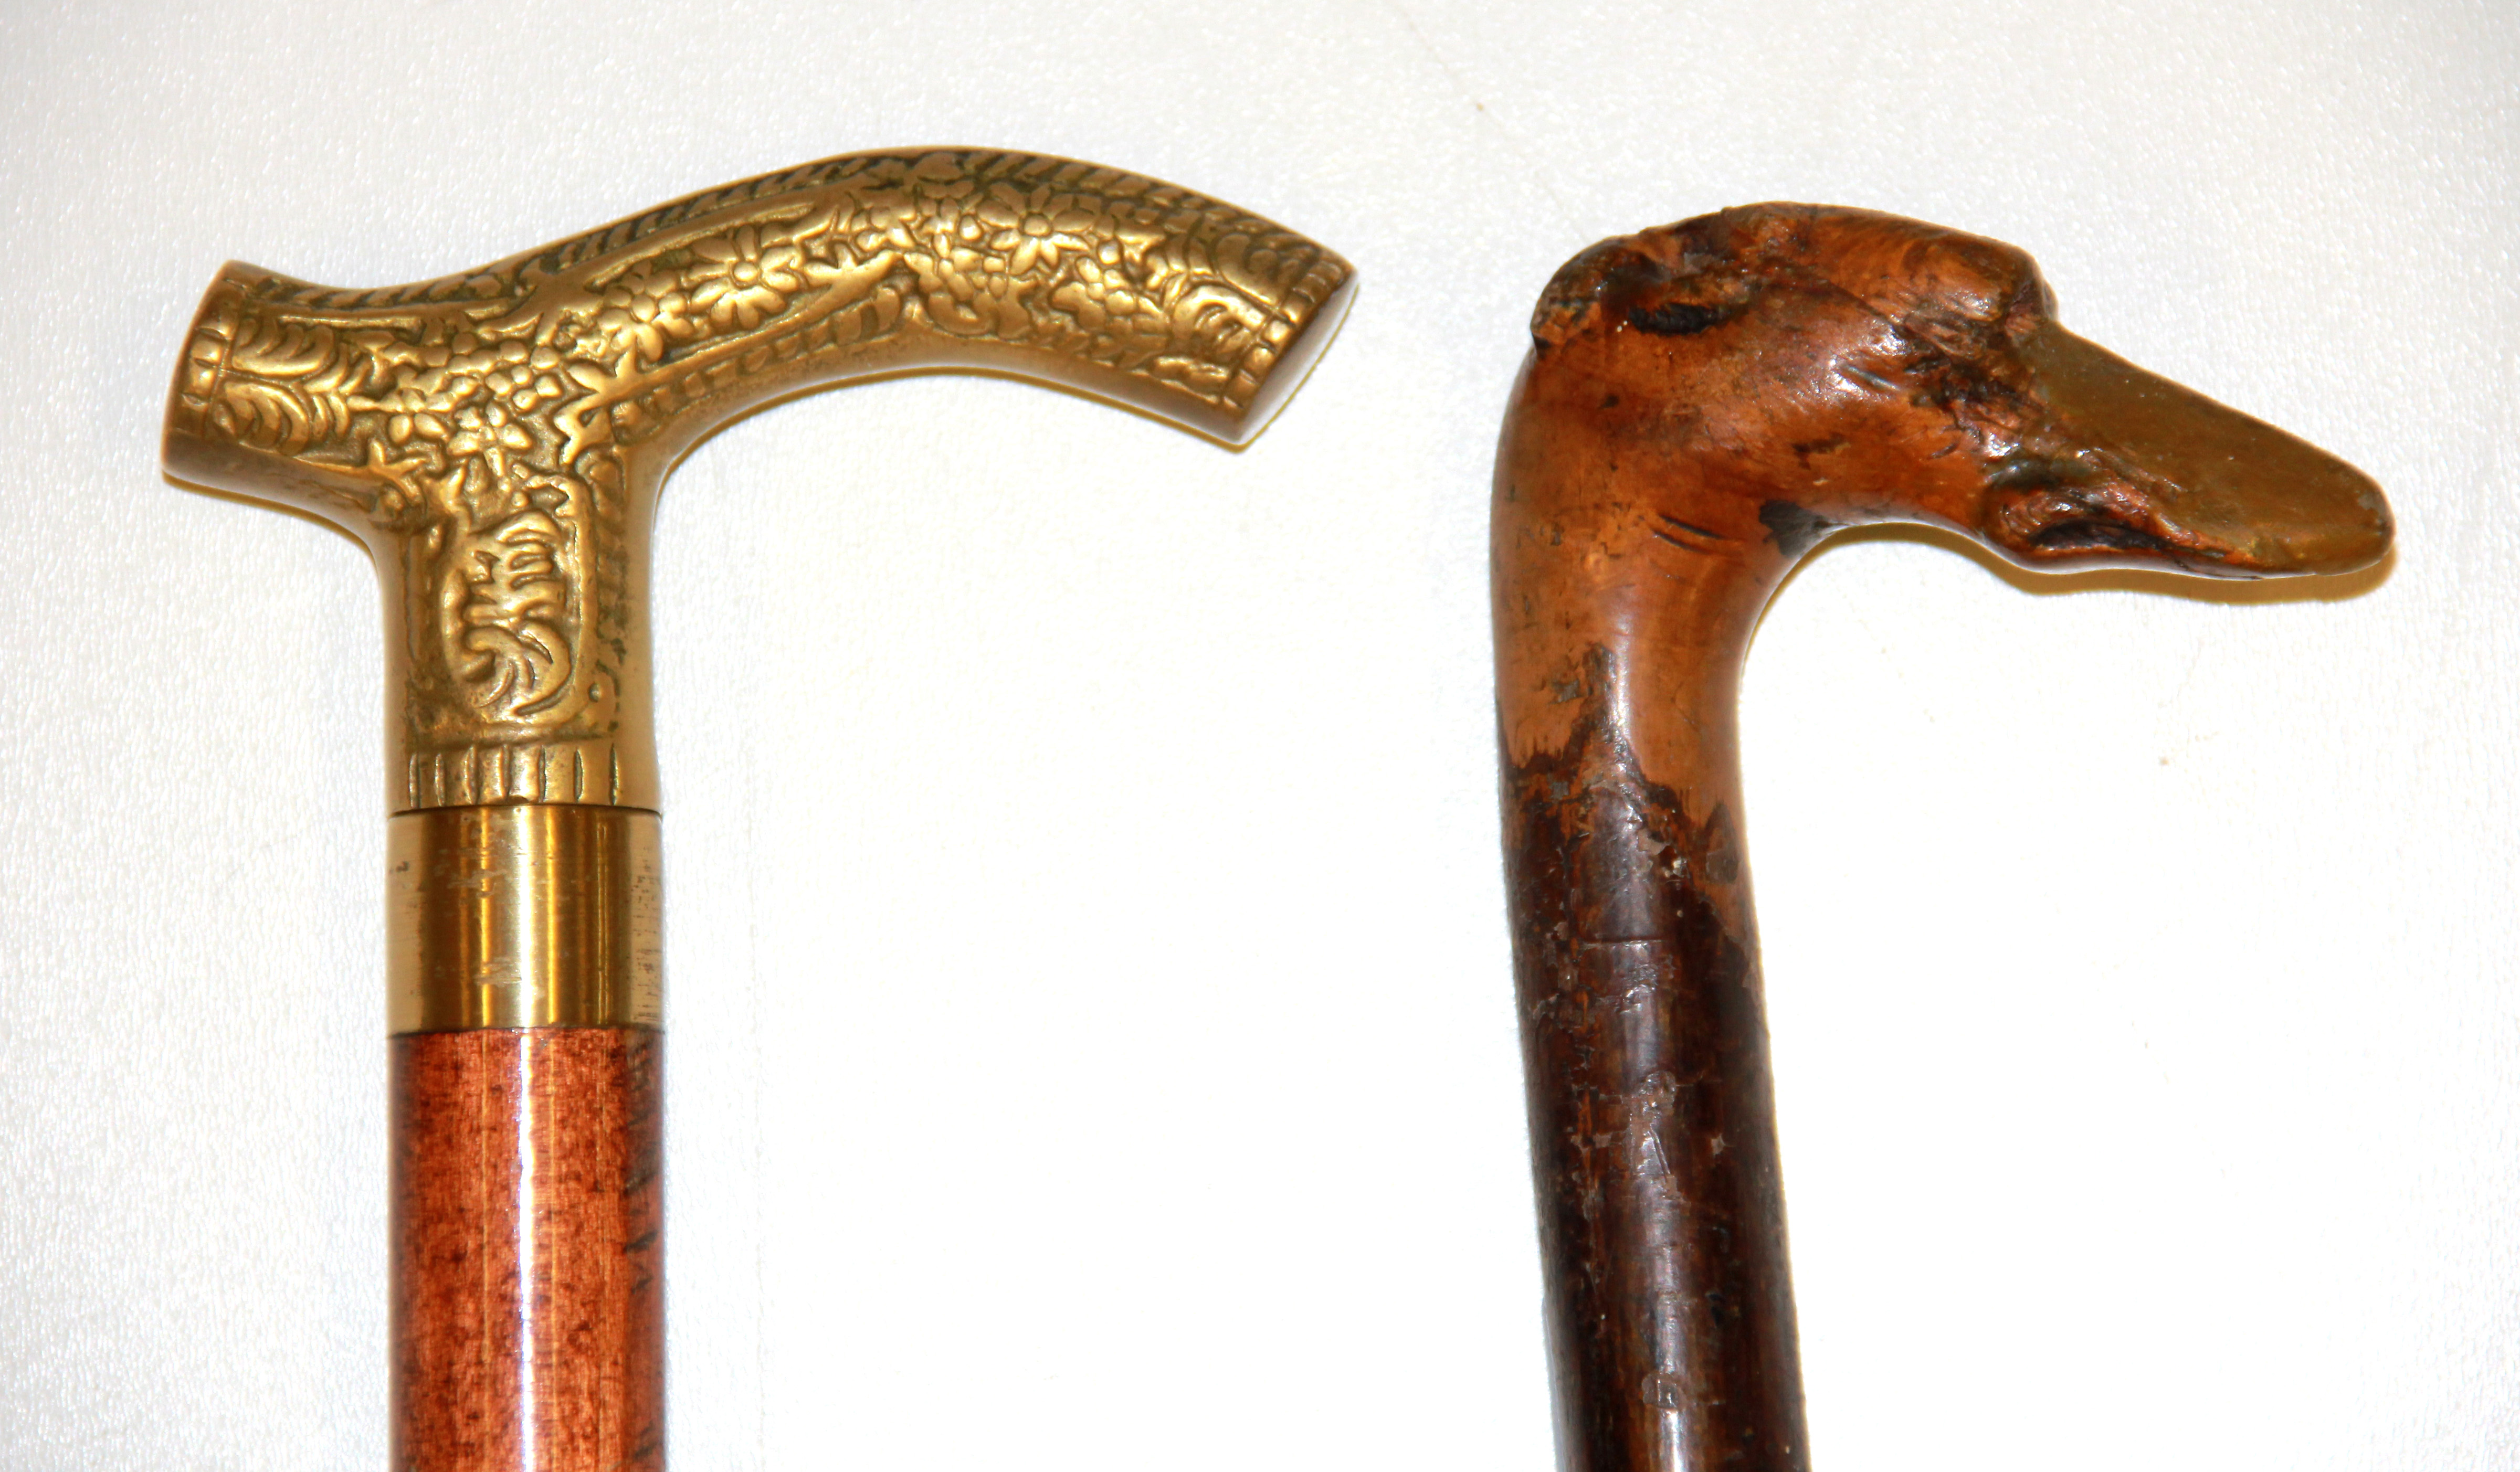 An interesting carved greyhound head walking stick and a modern brass handled walking stick